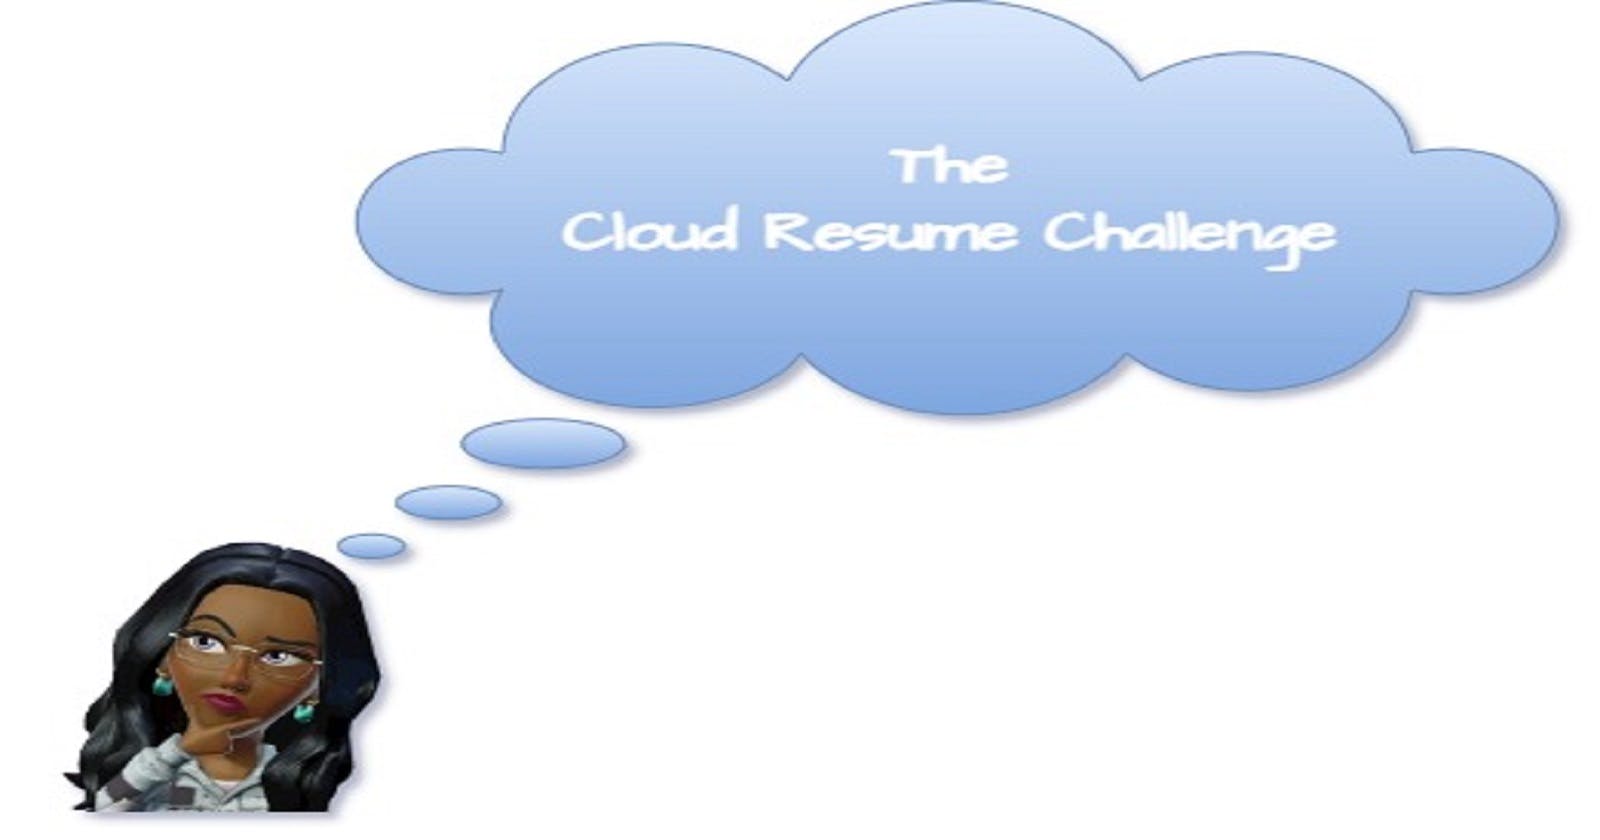 My Cloud Resume Challenge